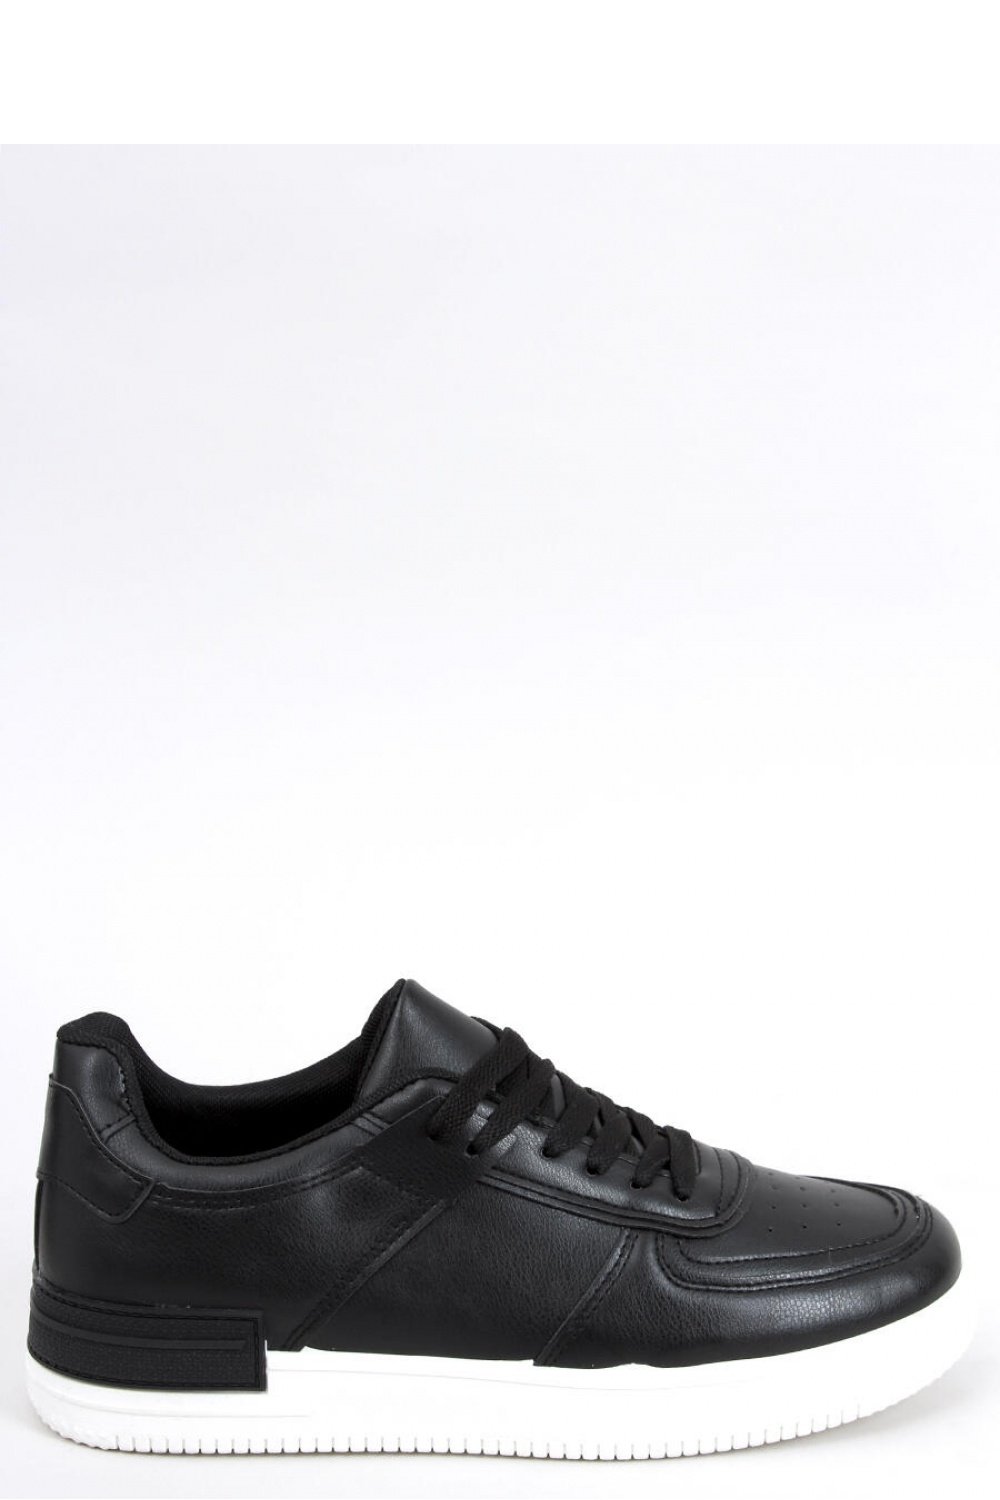 Sport Shoes model 164907 Inello Posh Styles Apparel